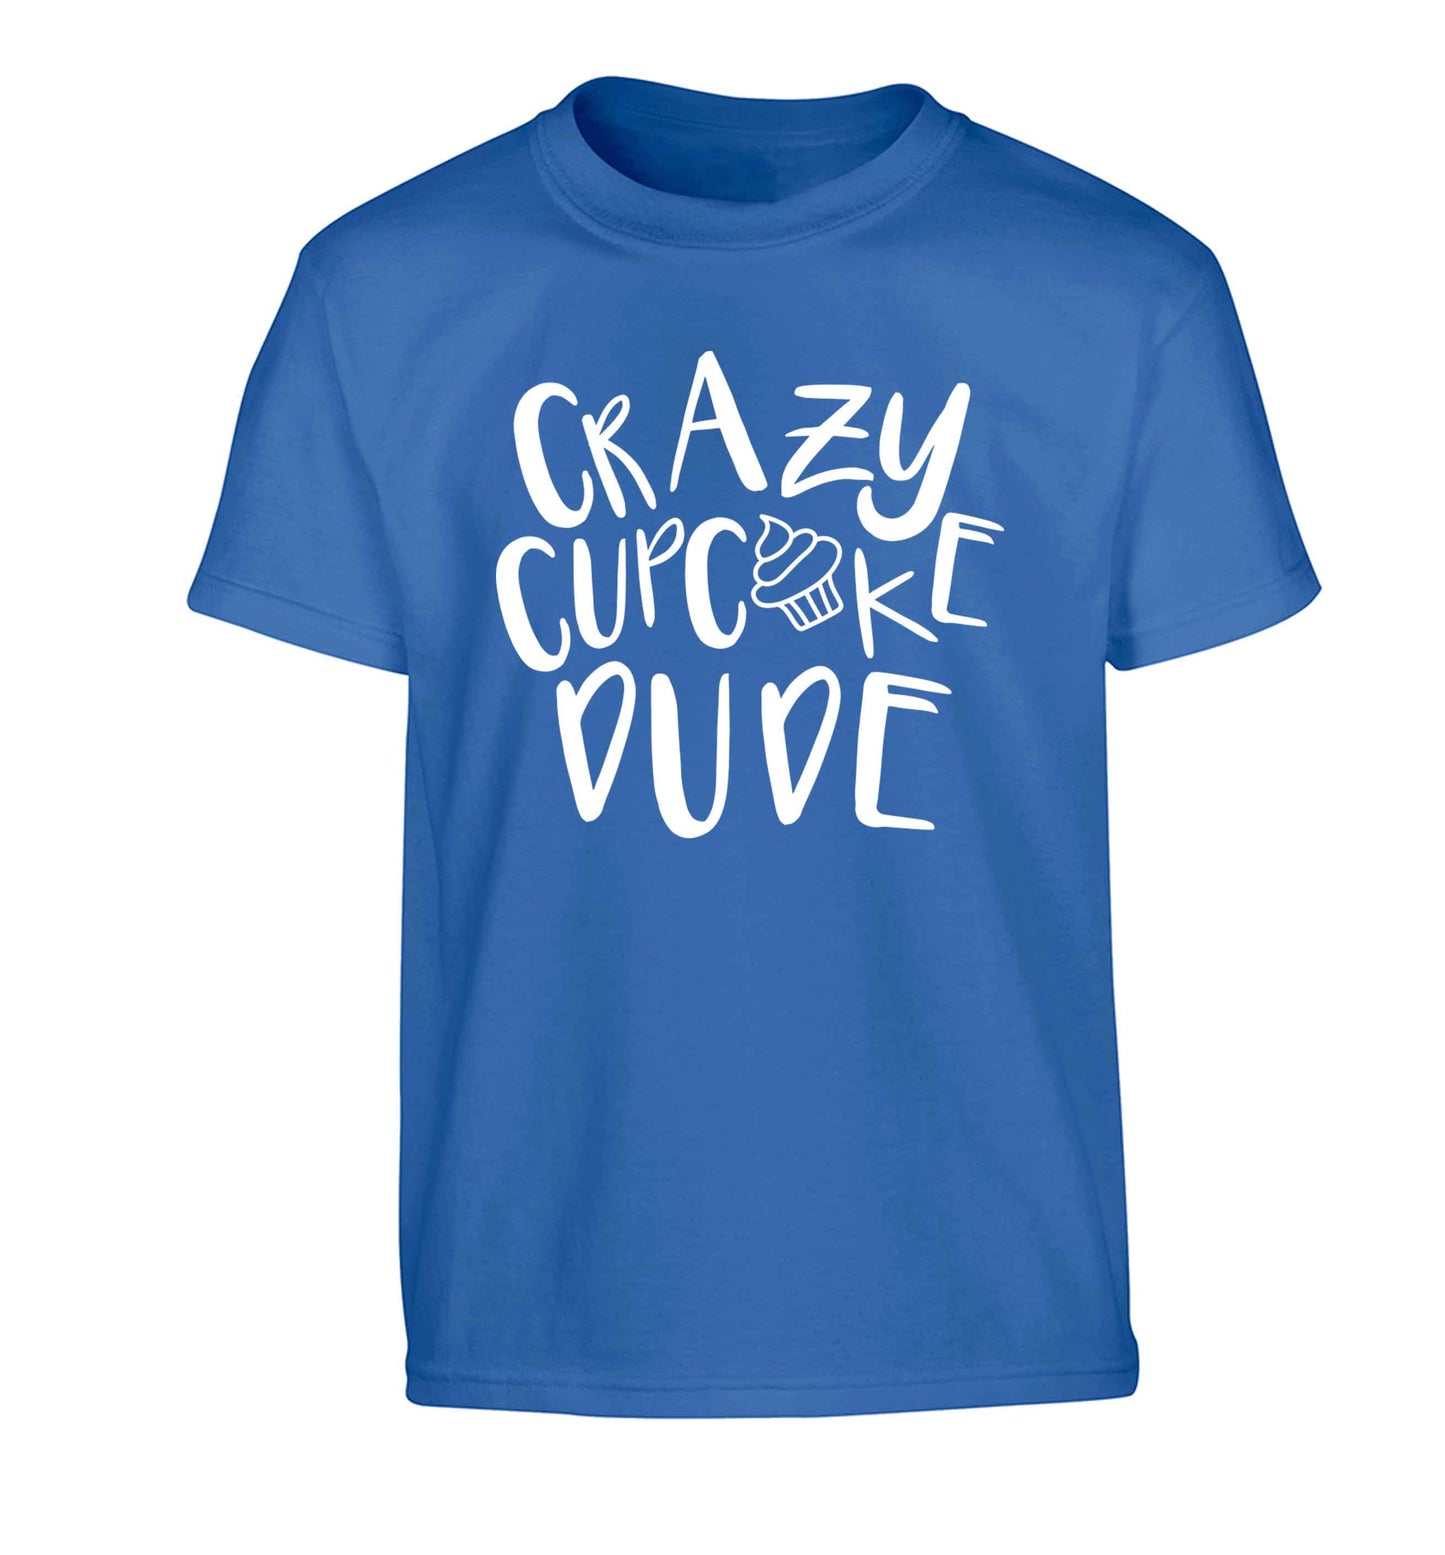 Crazy cupcake dude Children's blue Tshirt 12-13 Years